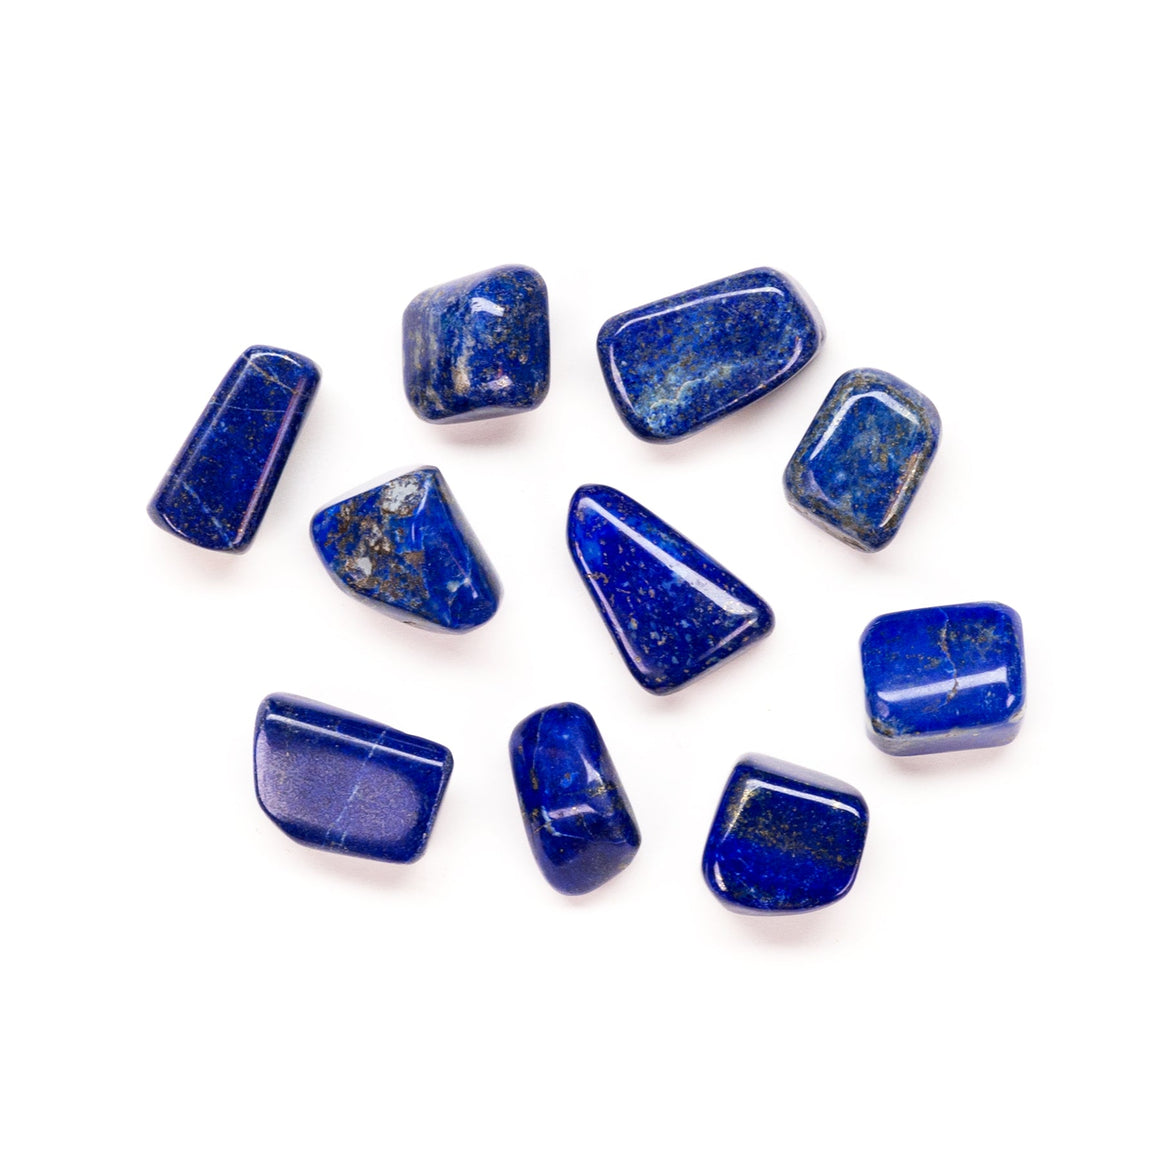 Lapis Lazuli, tumbled, one piece